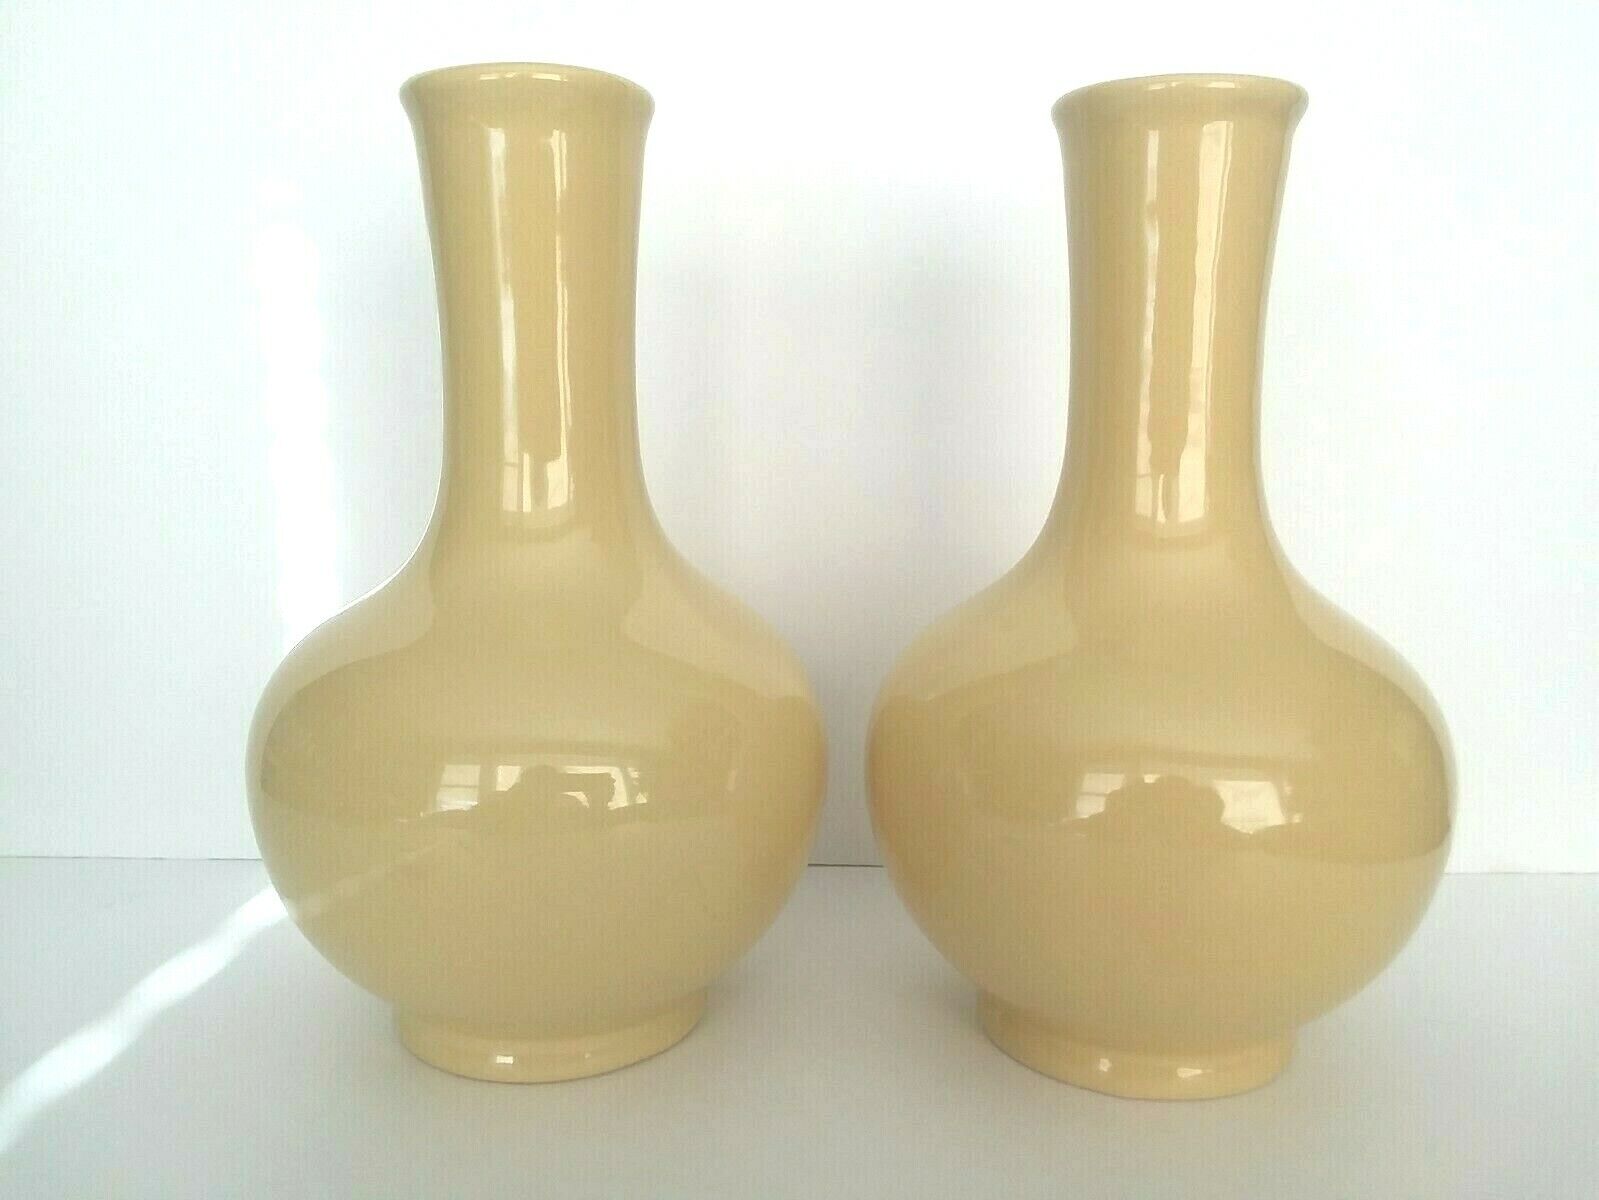 2 Vintage KOHLER Pottery Vases Used As TEST glaze  Sink Tub Toilet Genie bottle Без бренда